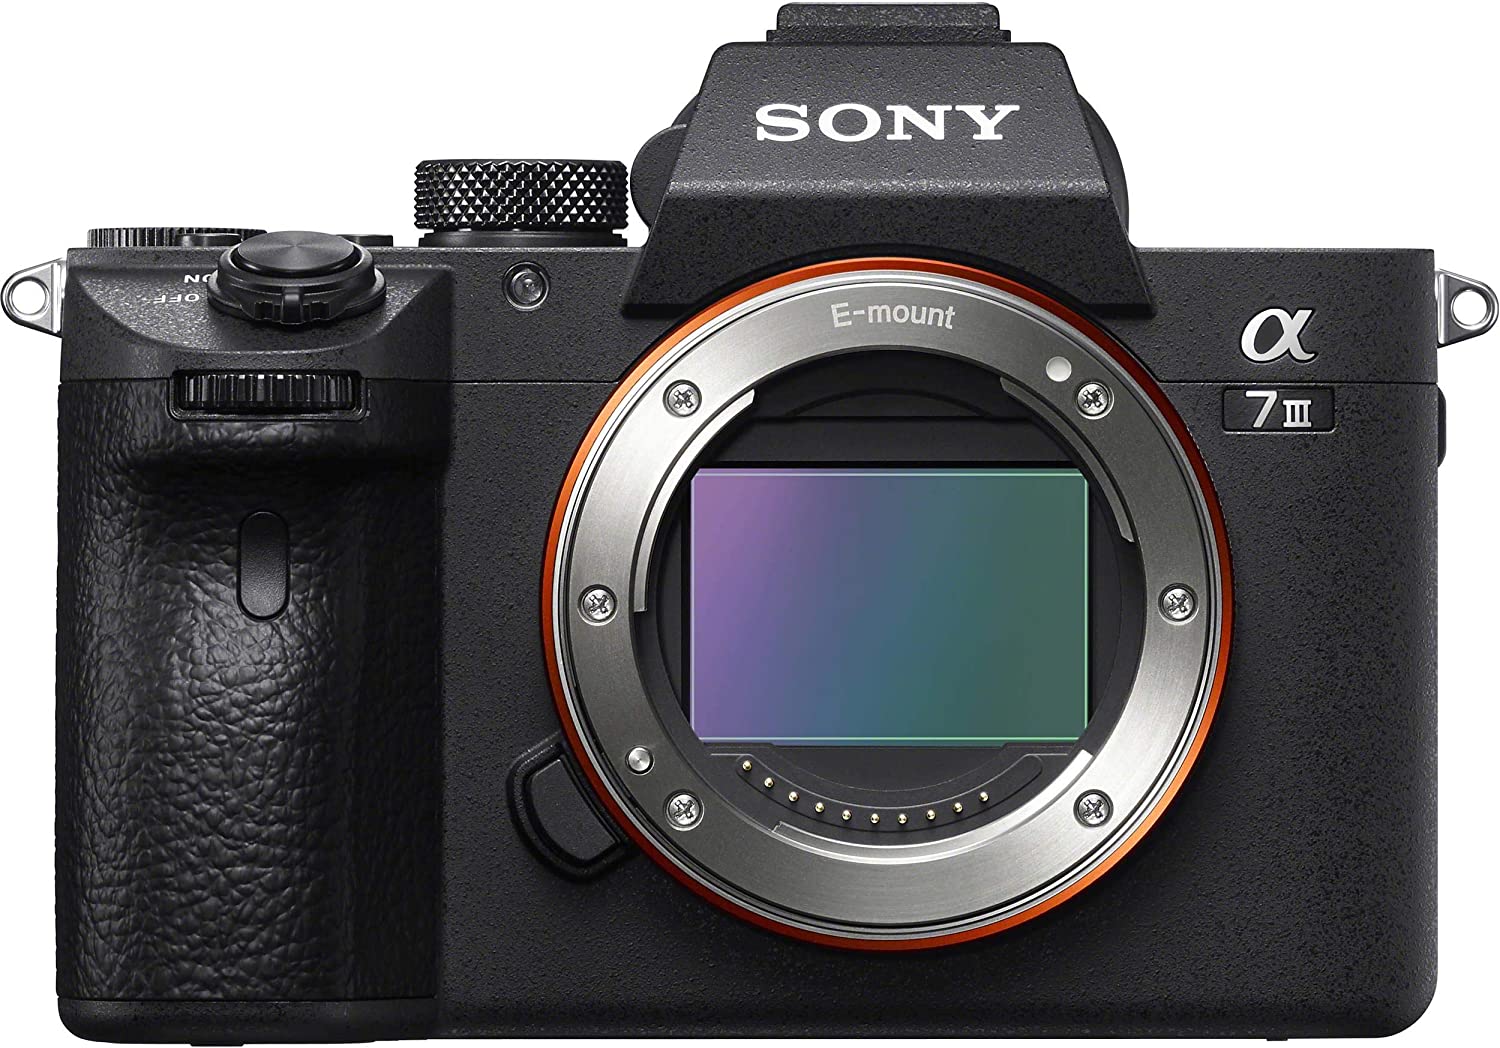 Sony Alpha a7 III Mirrorless Digital Camera with 28-70mm f/3.5-5.6 Lens - Kit